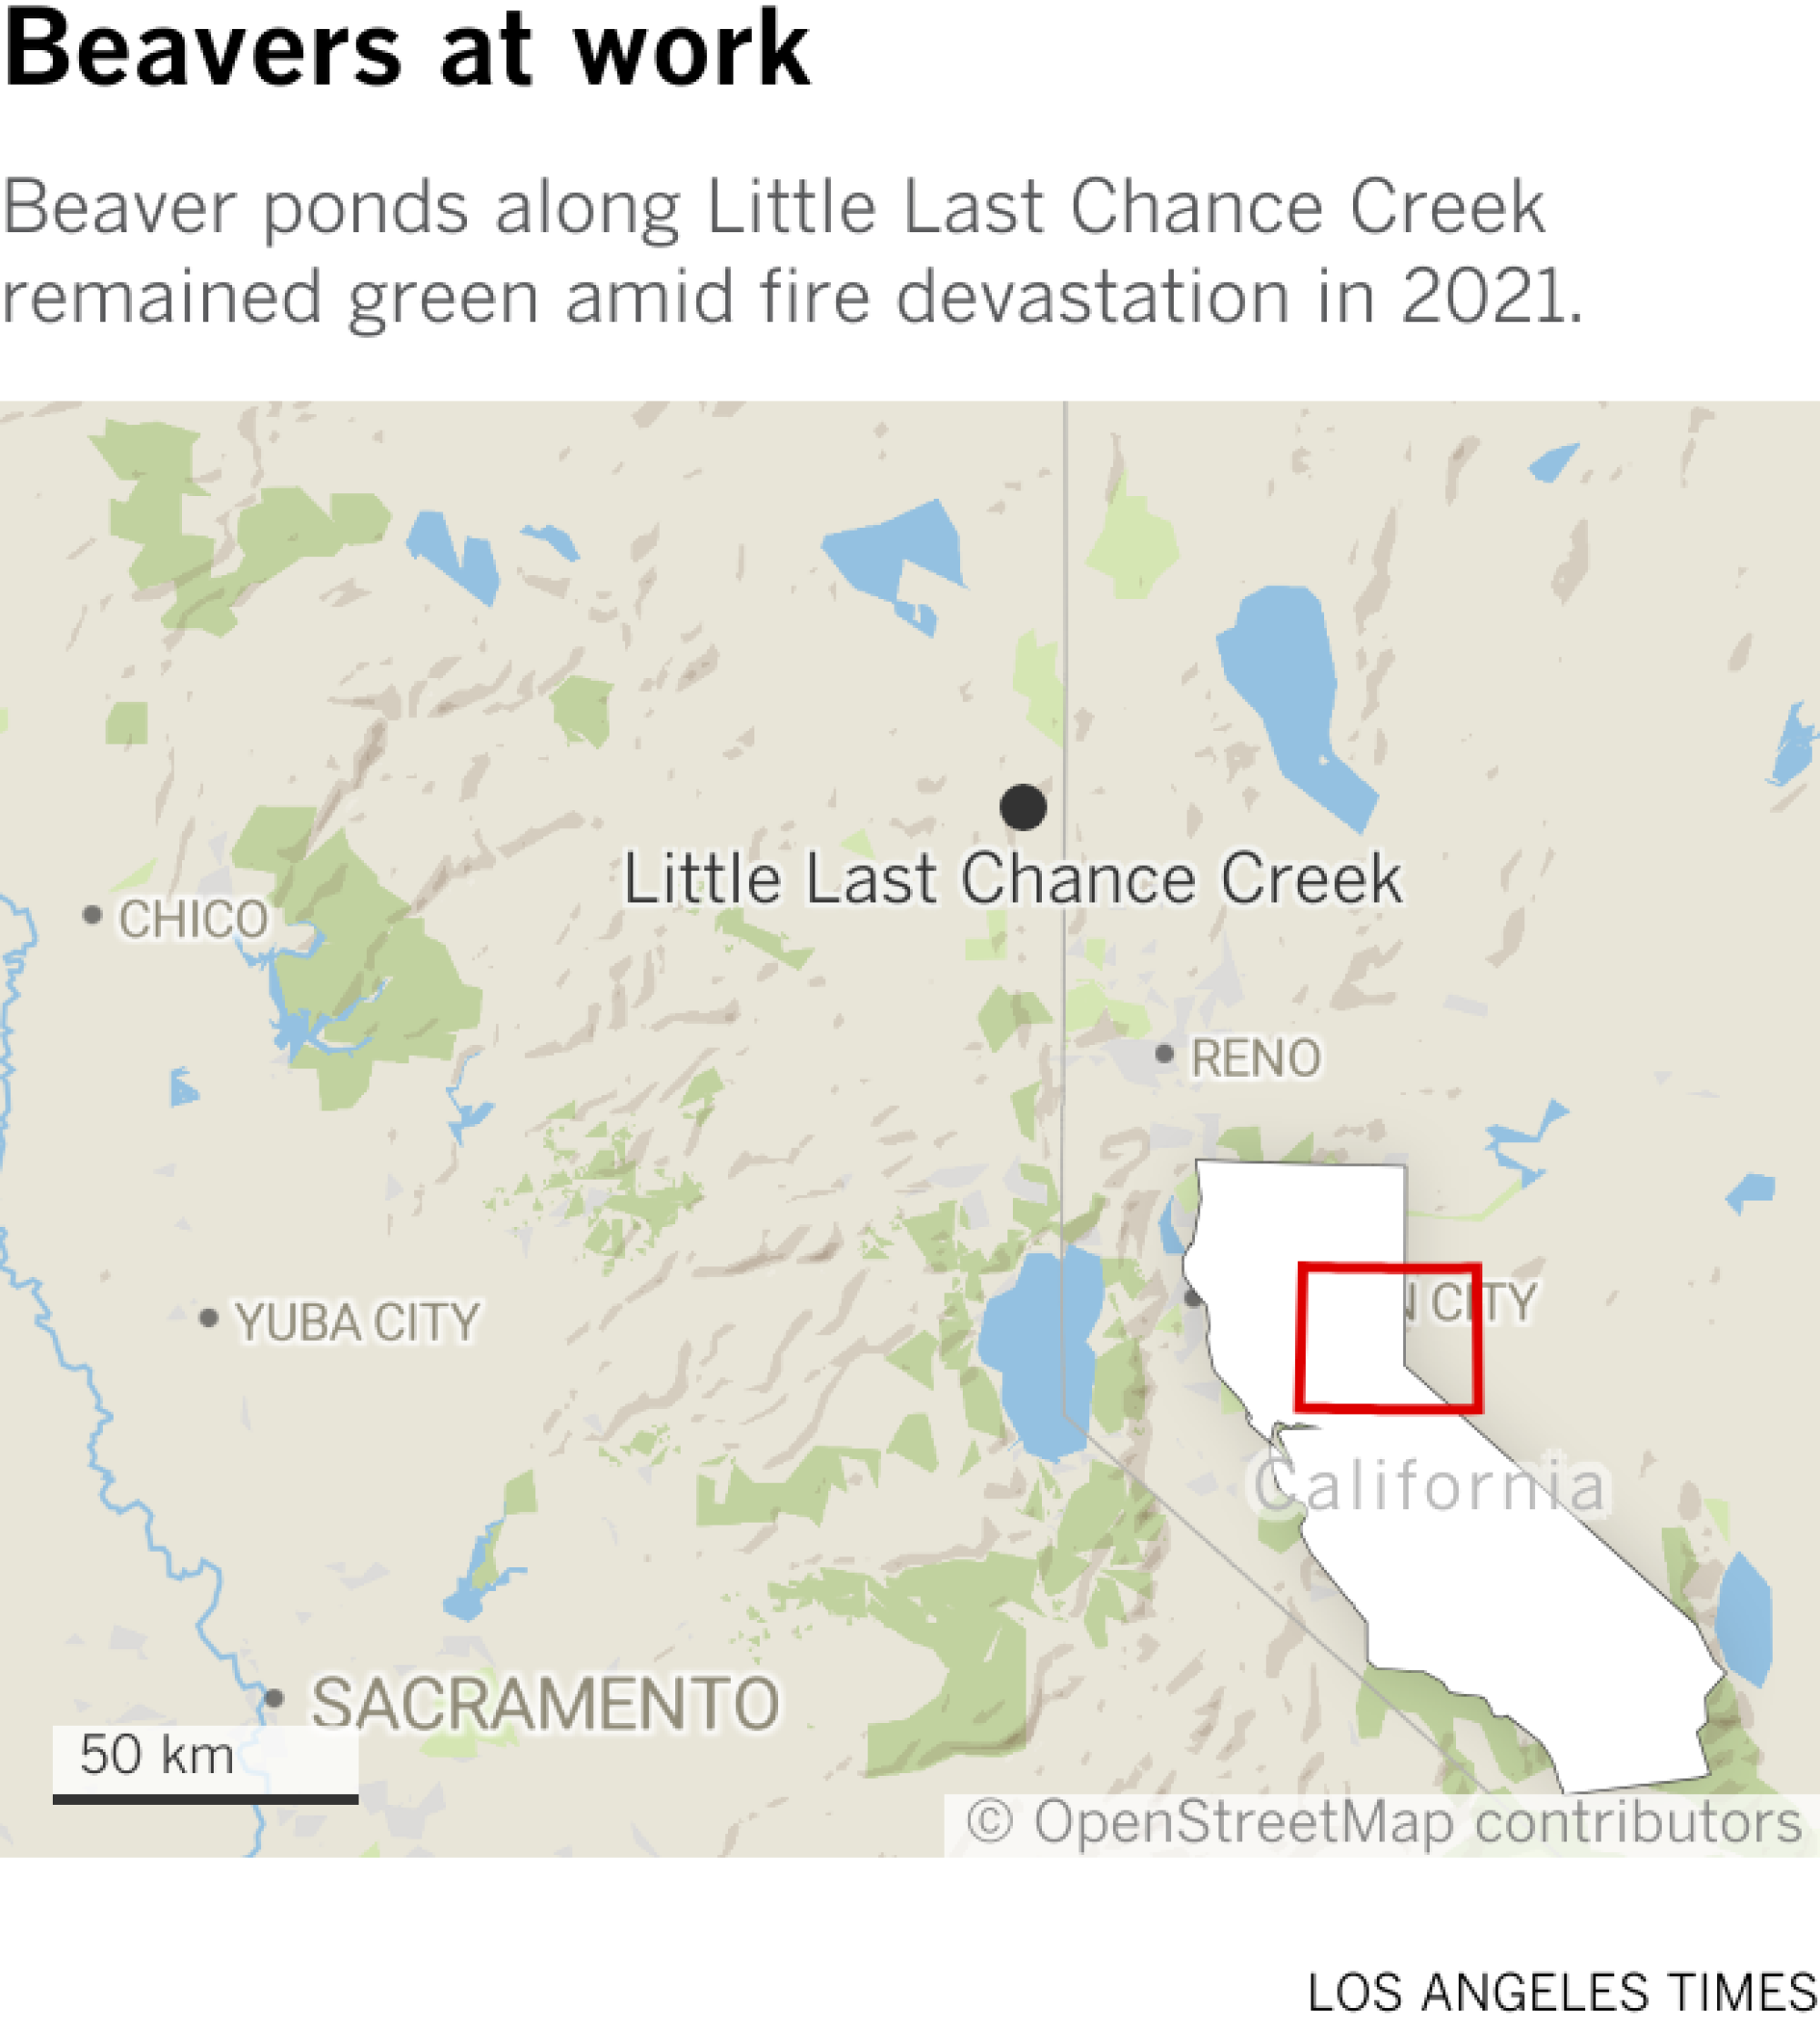 Die Karte zeigt Little Last Chance Creek in Nordkalifornien.